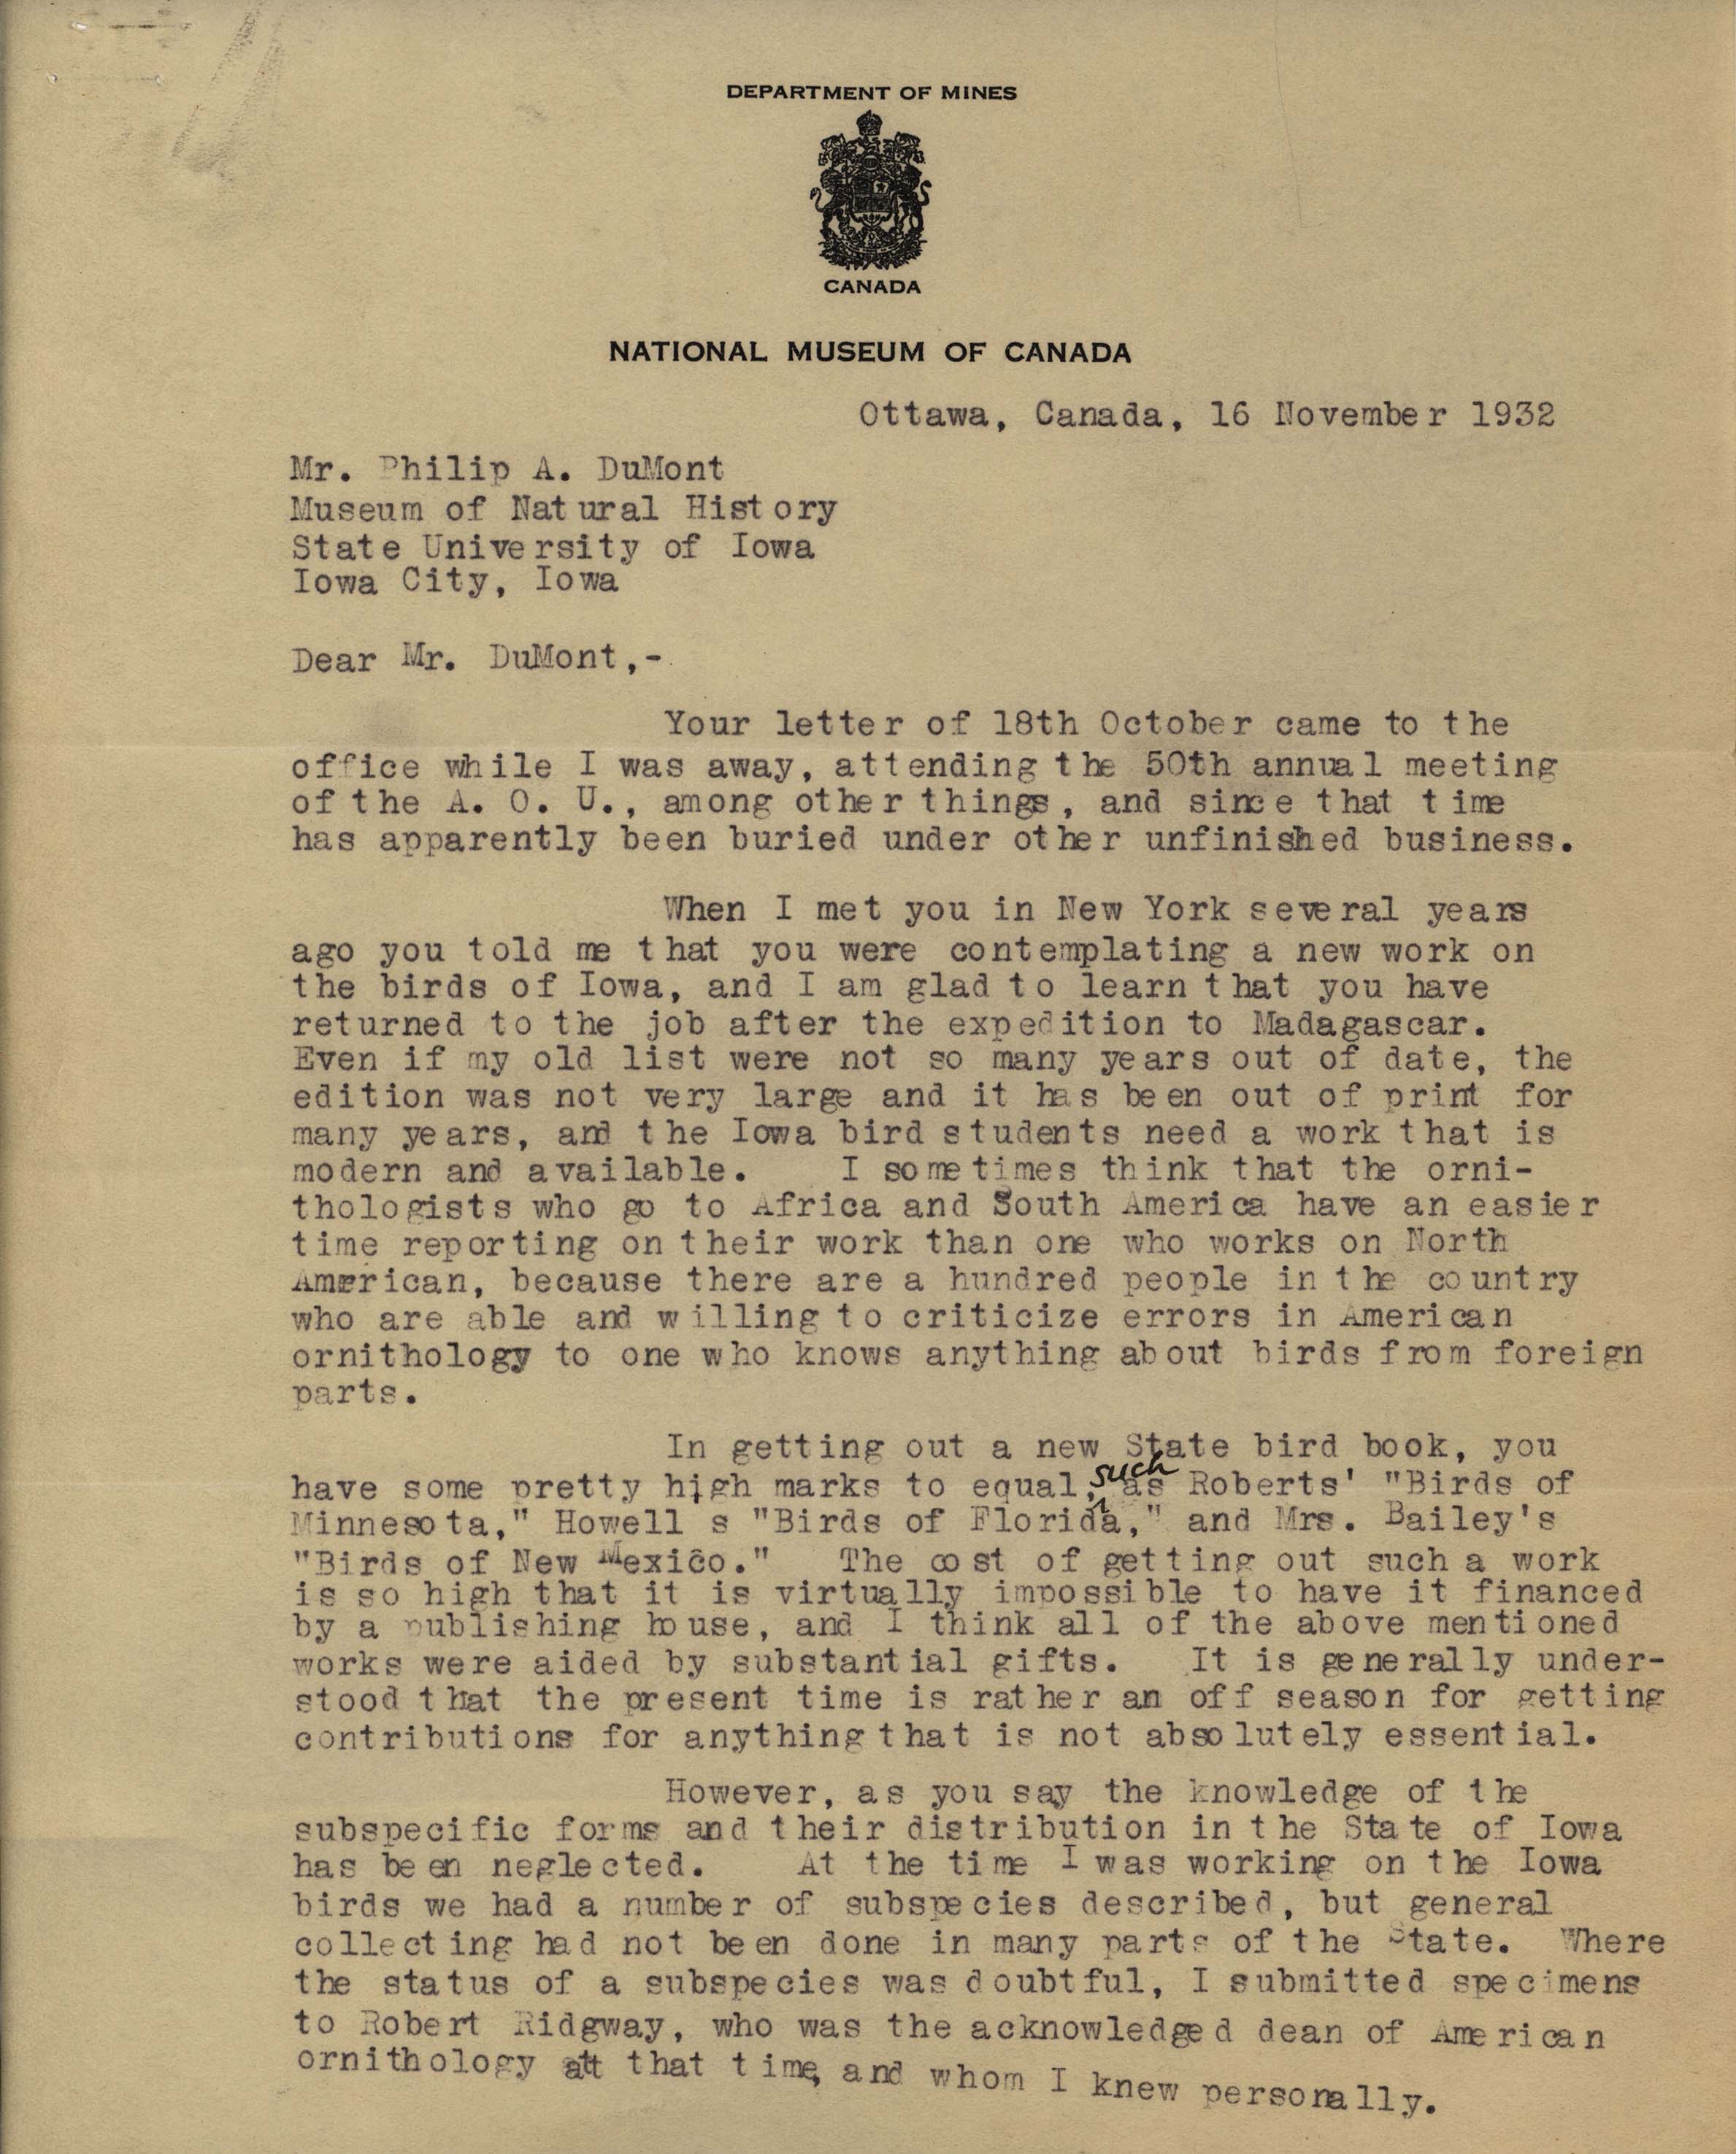 Rudolph Anderson letter to Philip DuMont regarding 